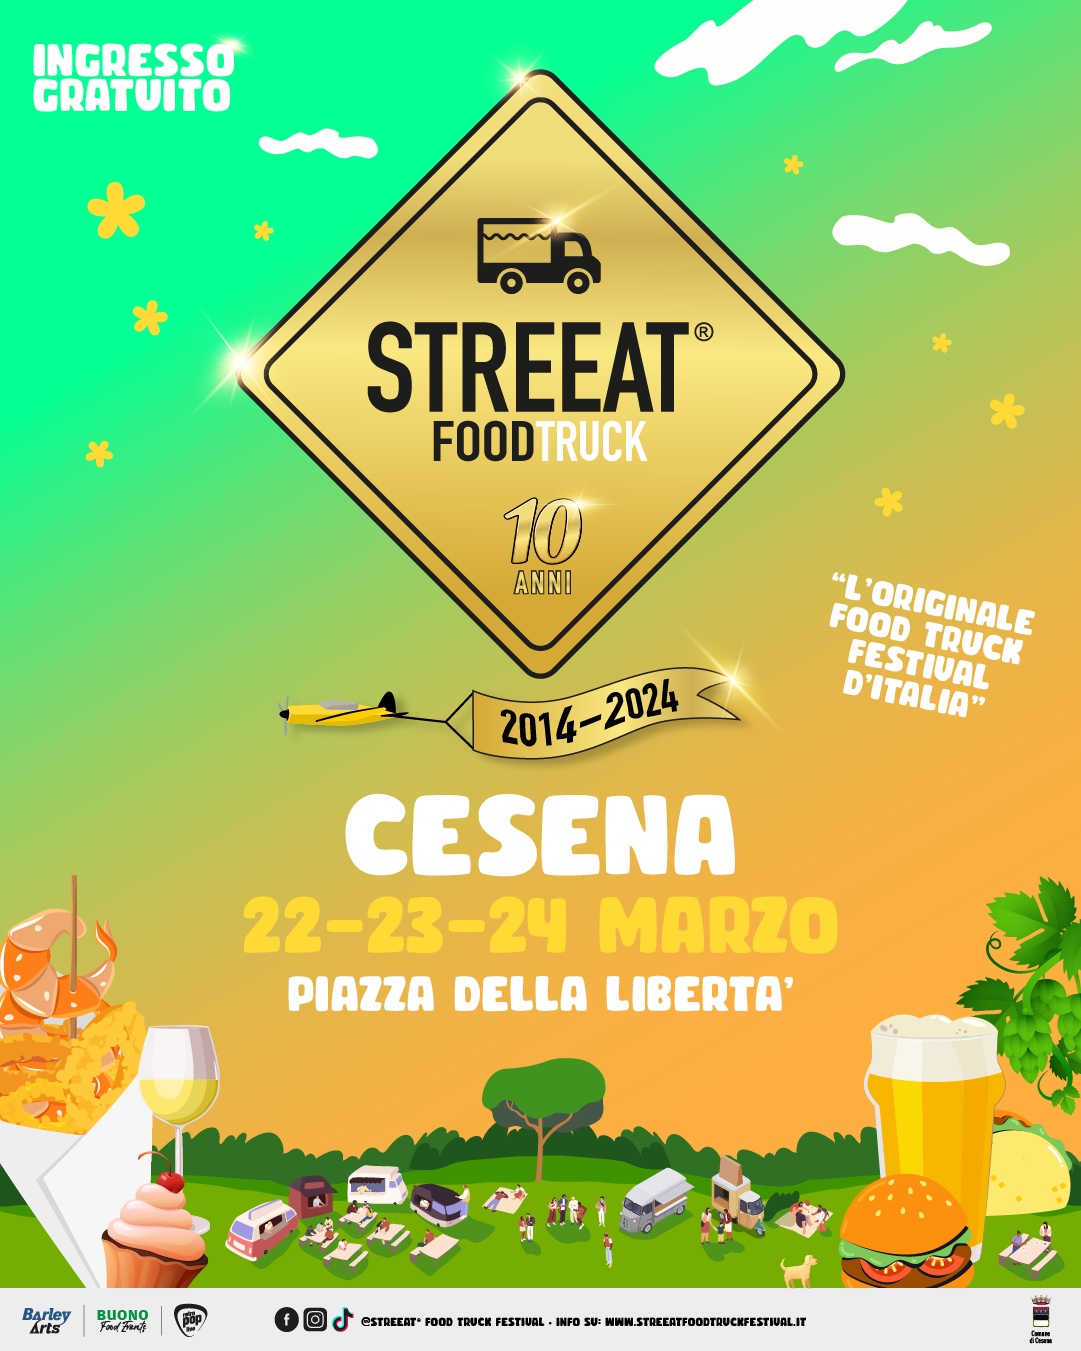 Streeat_evento Cesena